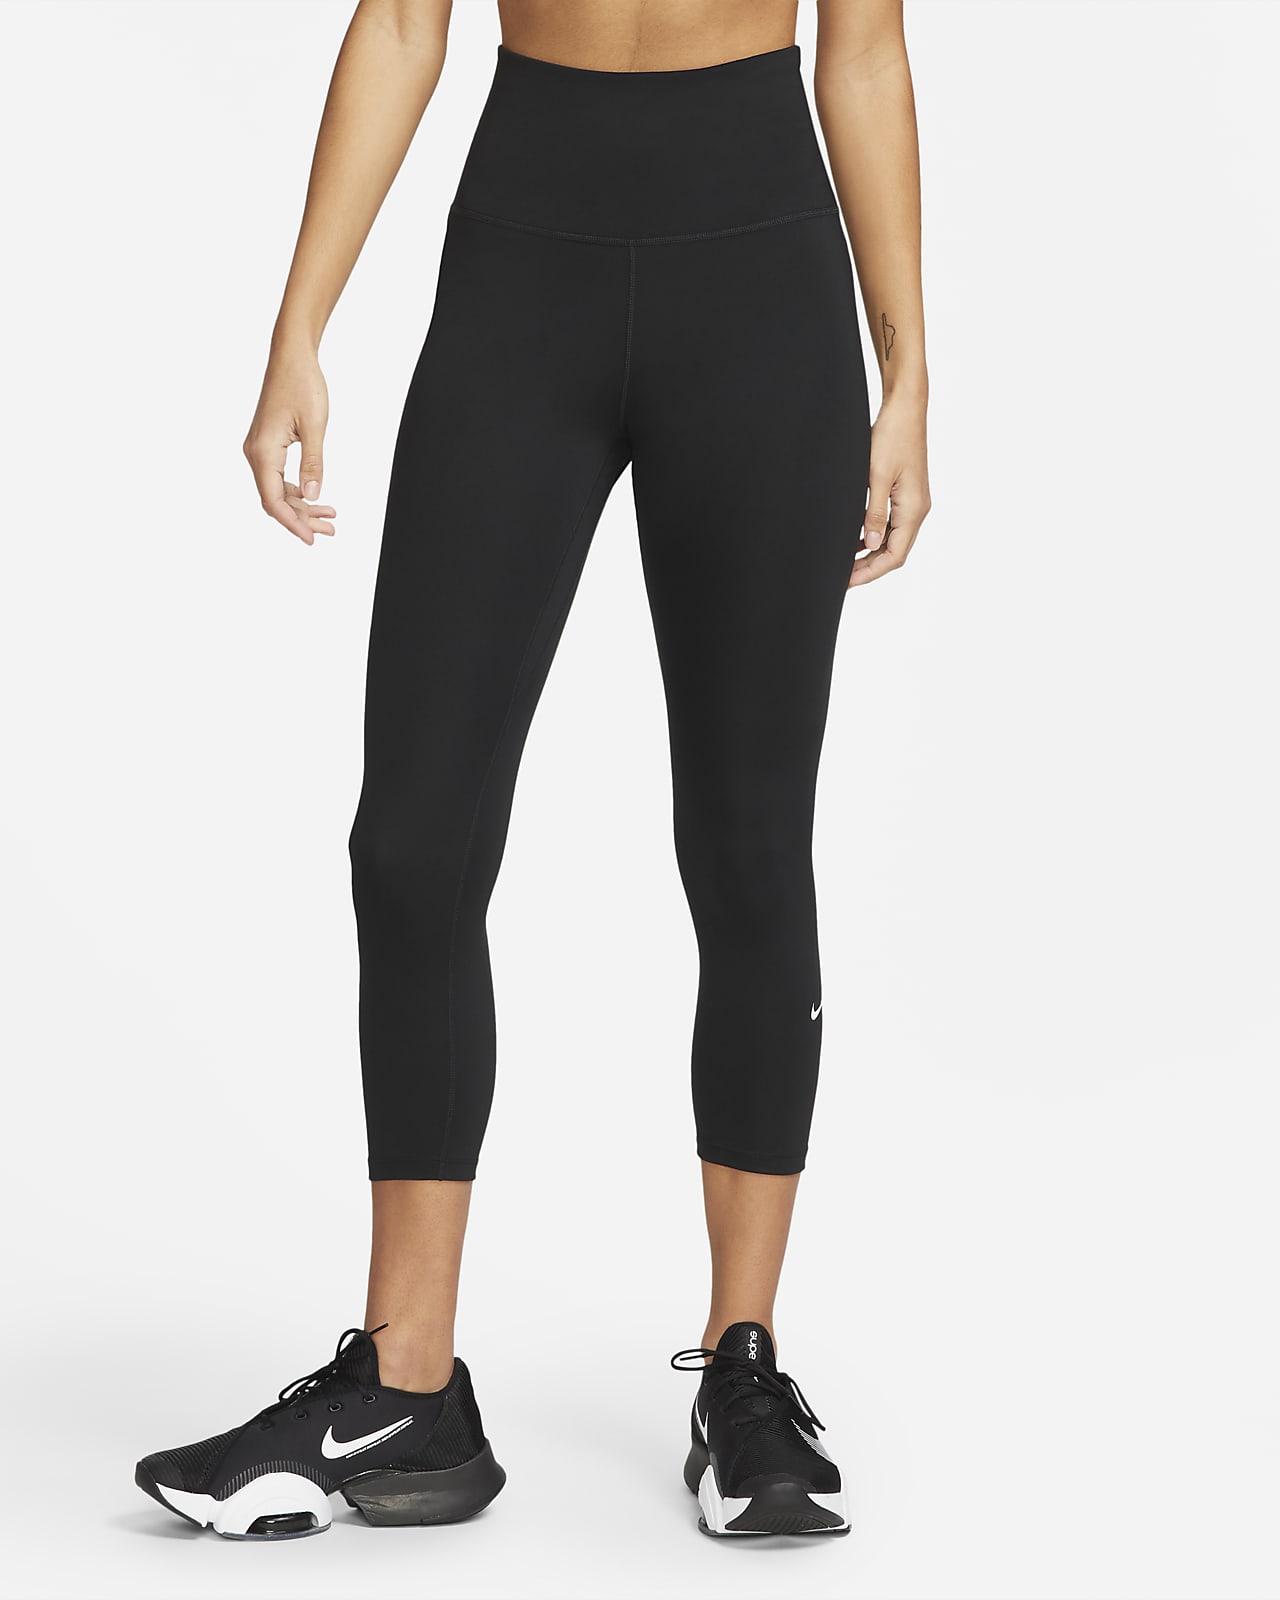 Nike One Leggings cortos de talle alto elásticos - Mujer